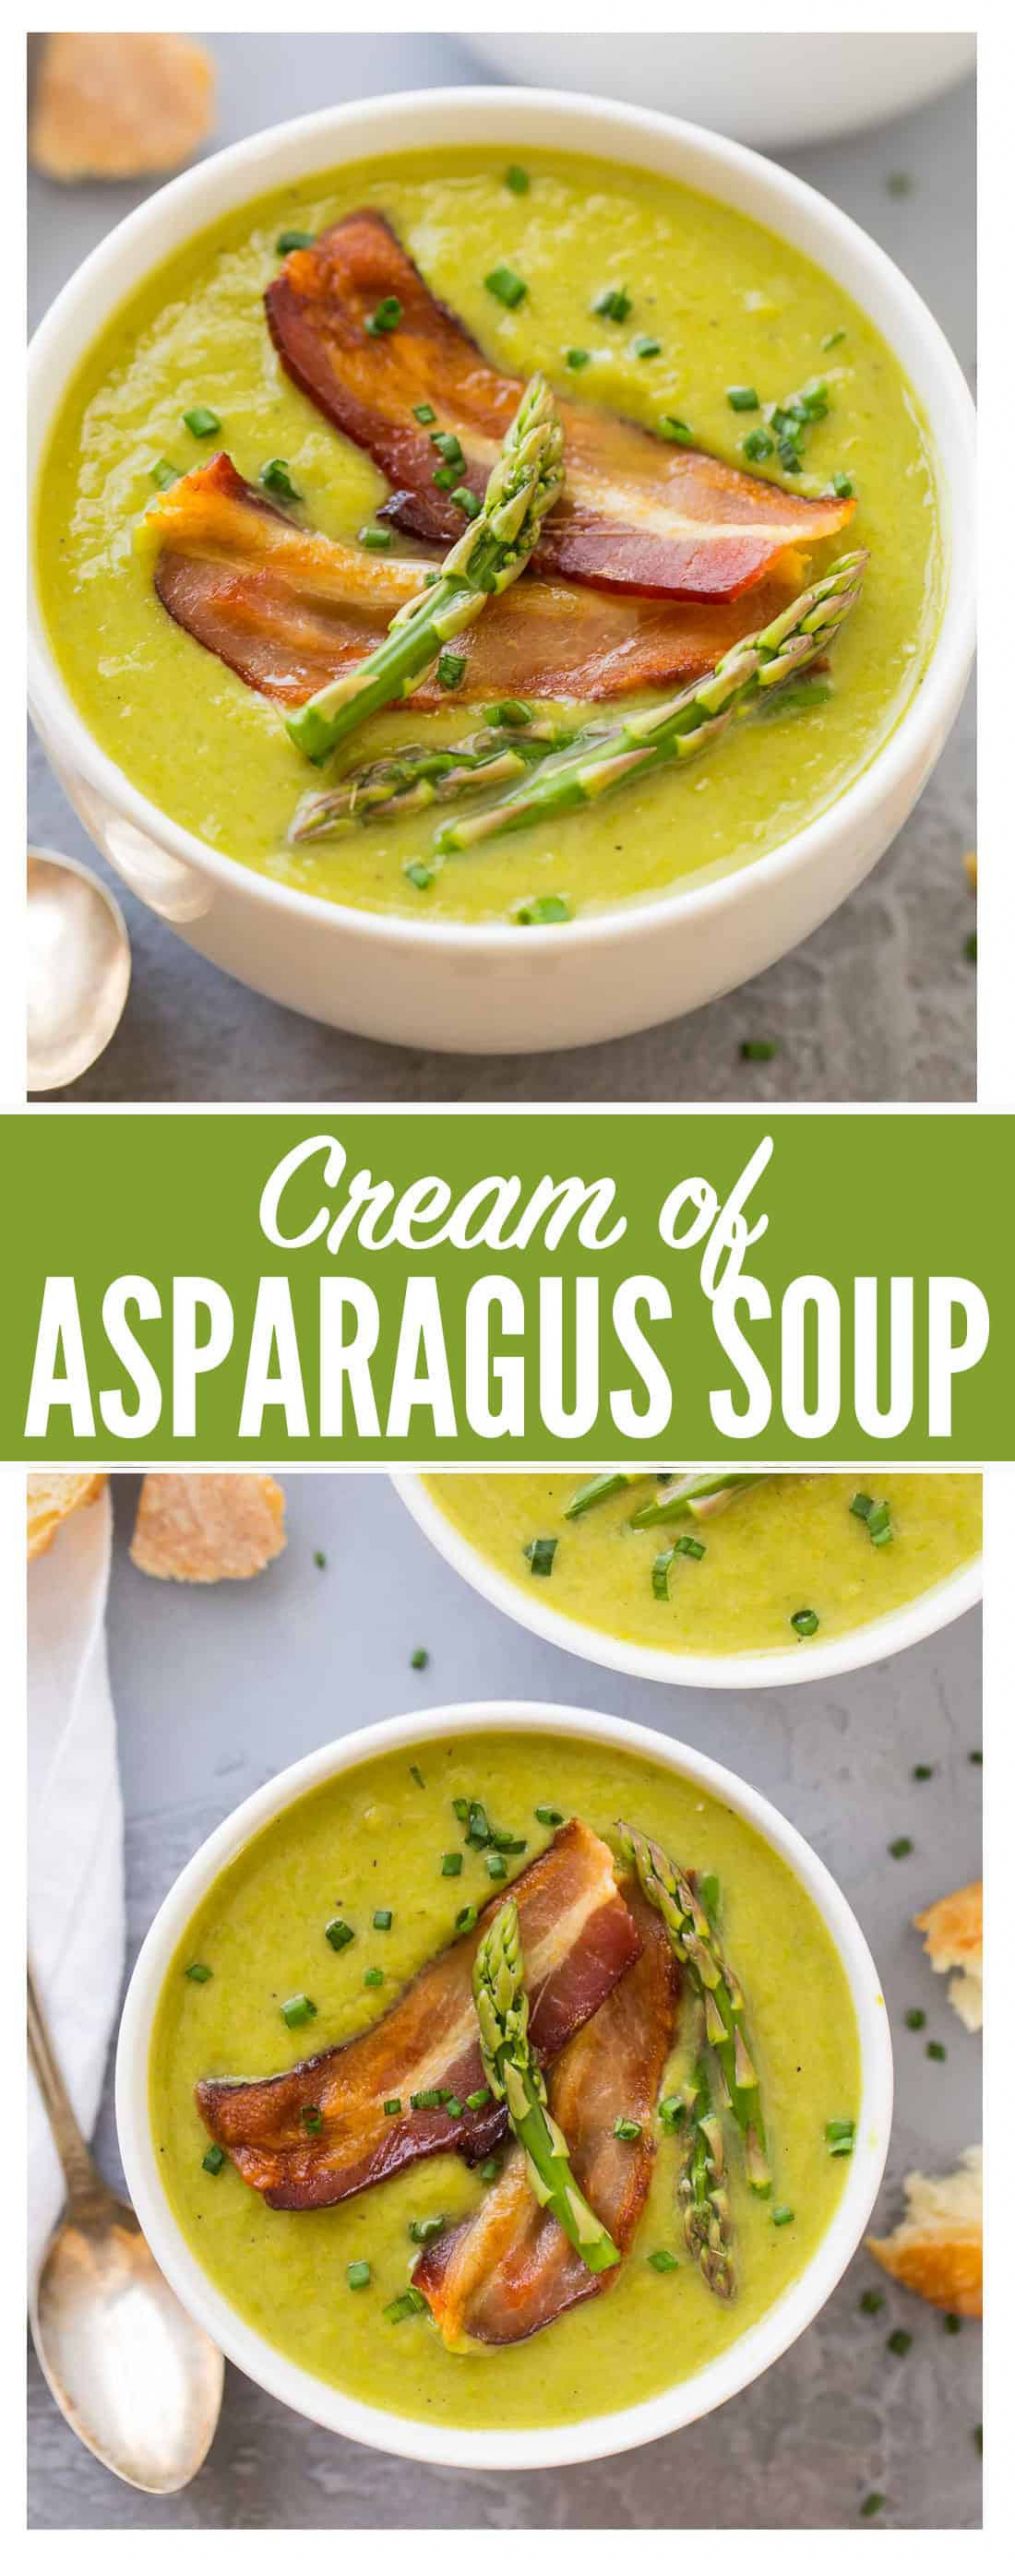 Healthy Asparagus Soup
 Asparagus Soup